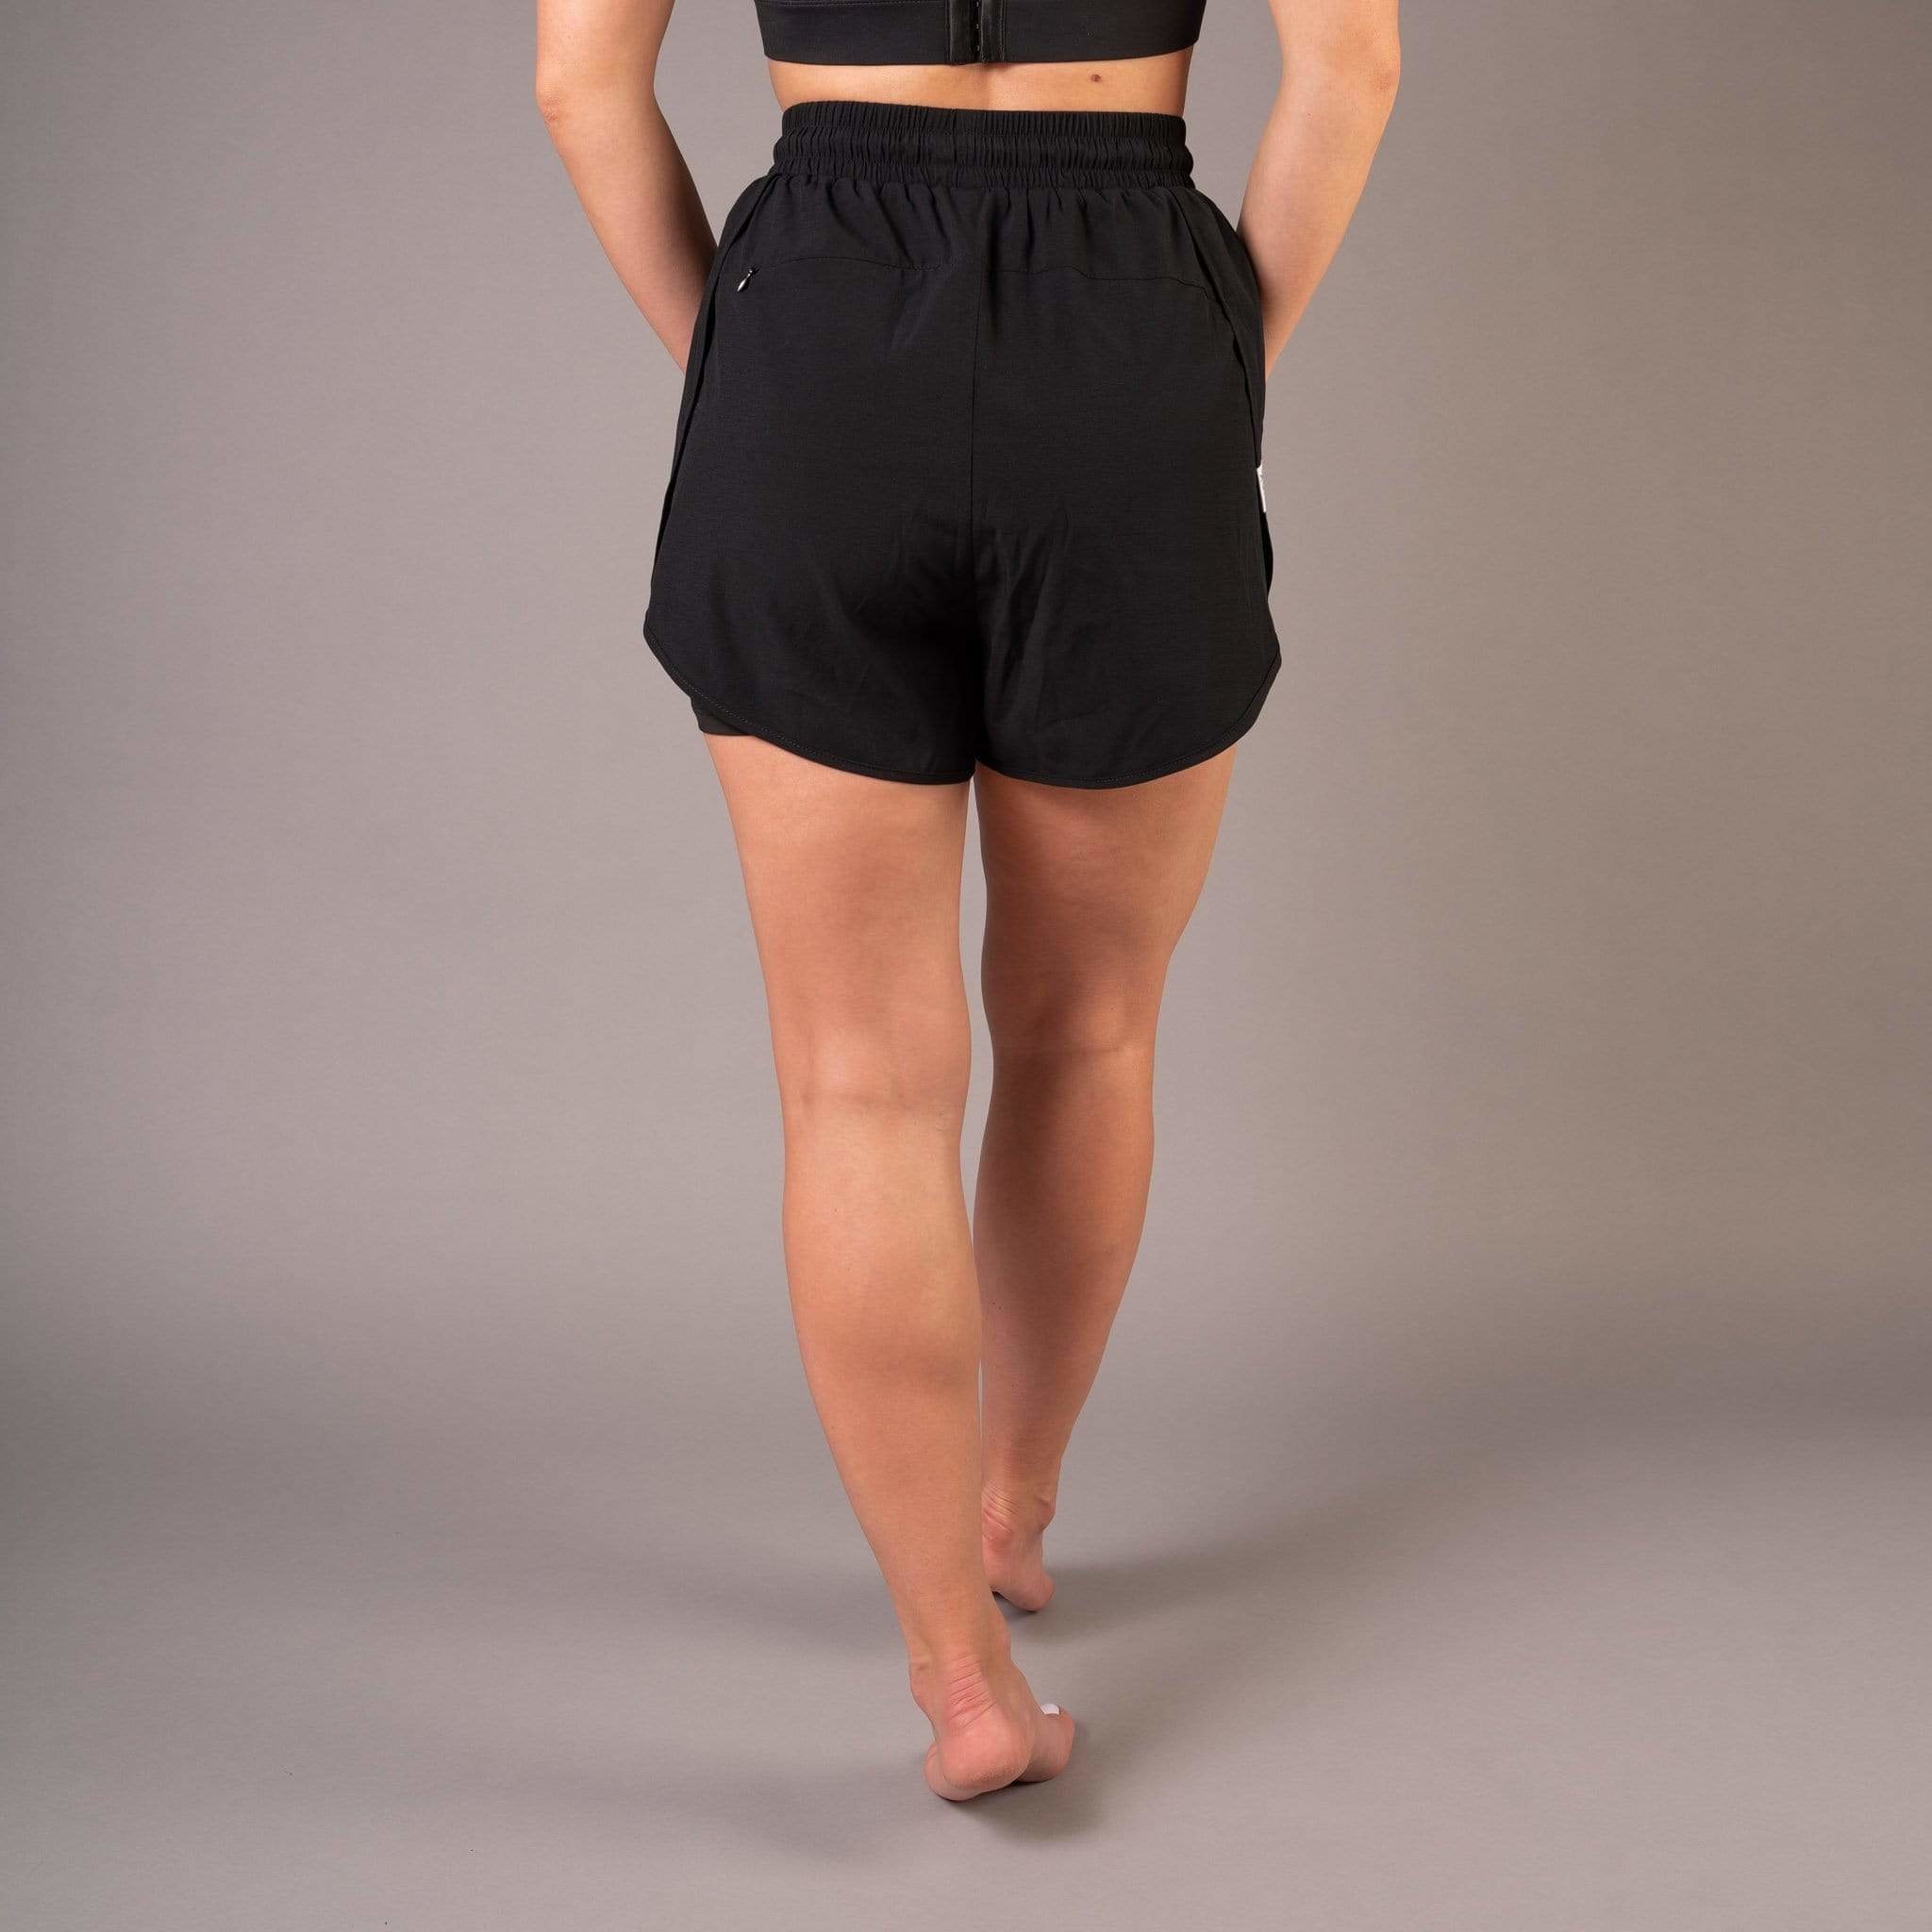 BARA Sportswear Dames hardloopbroek kort 2 in 1 athletic short zwart